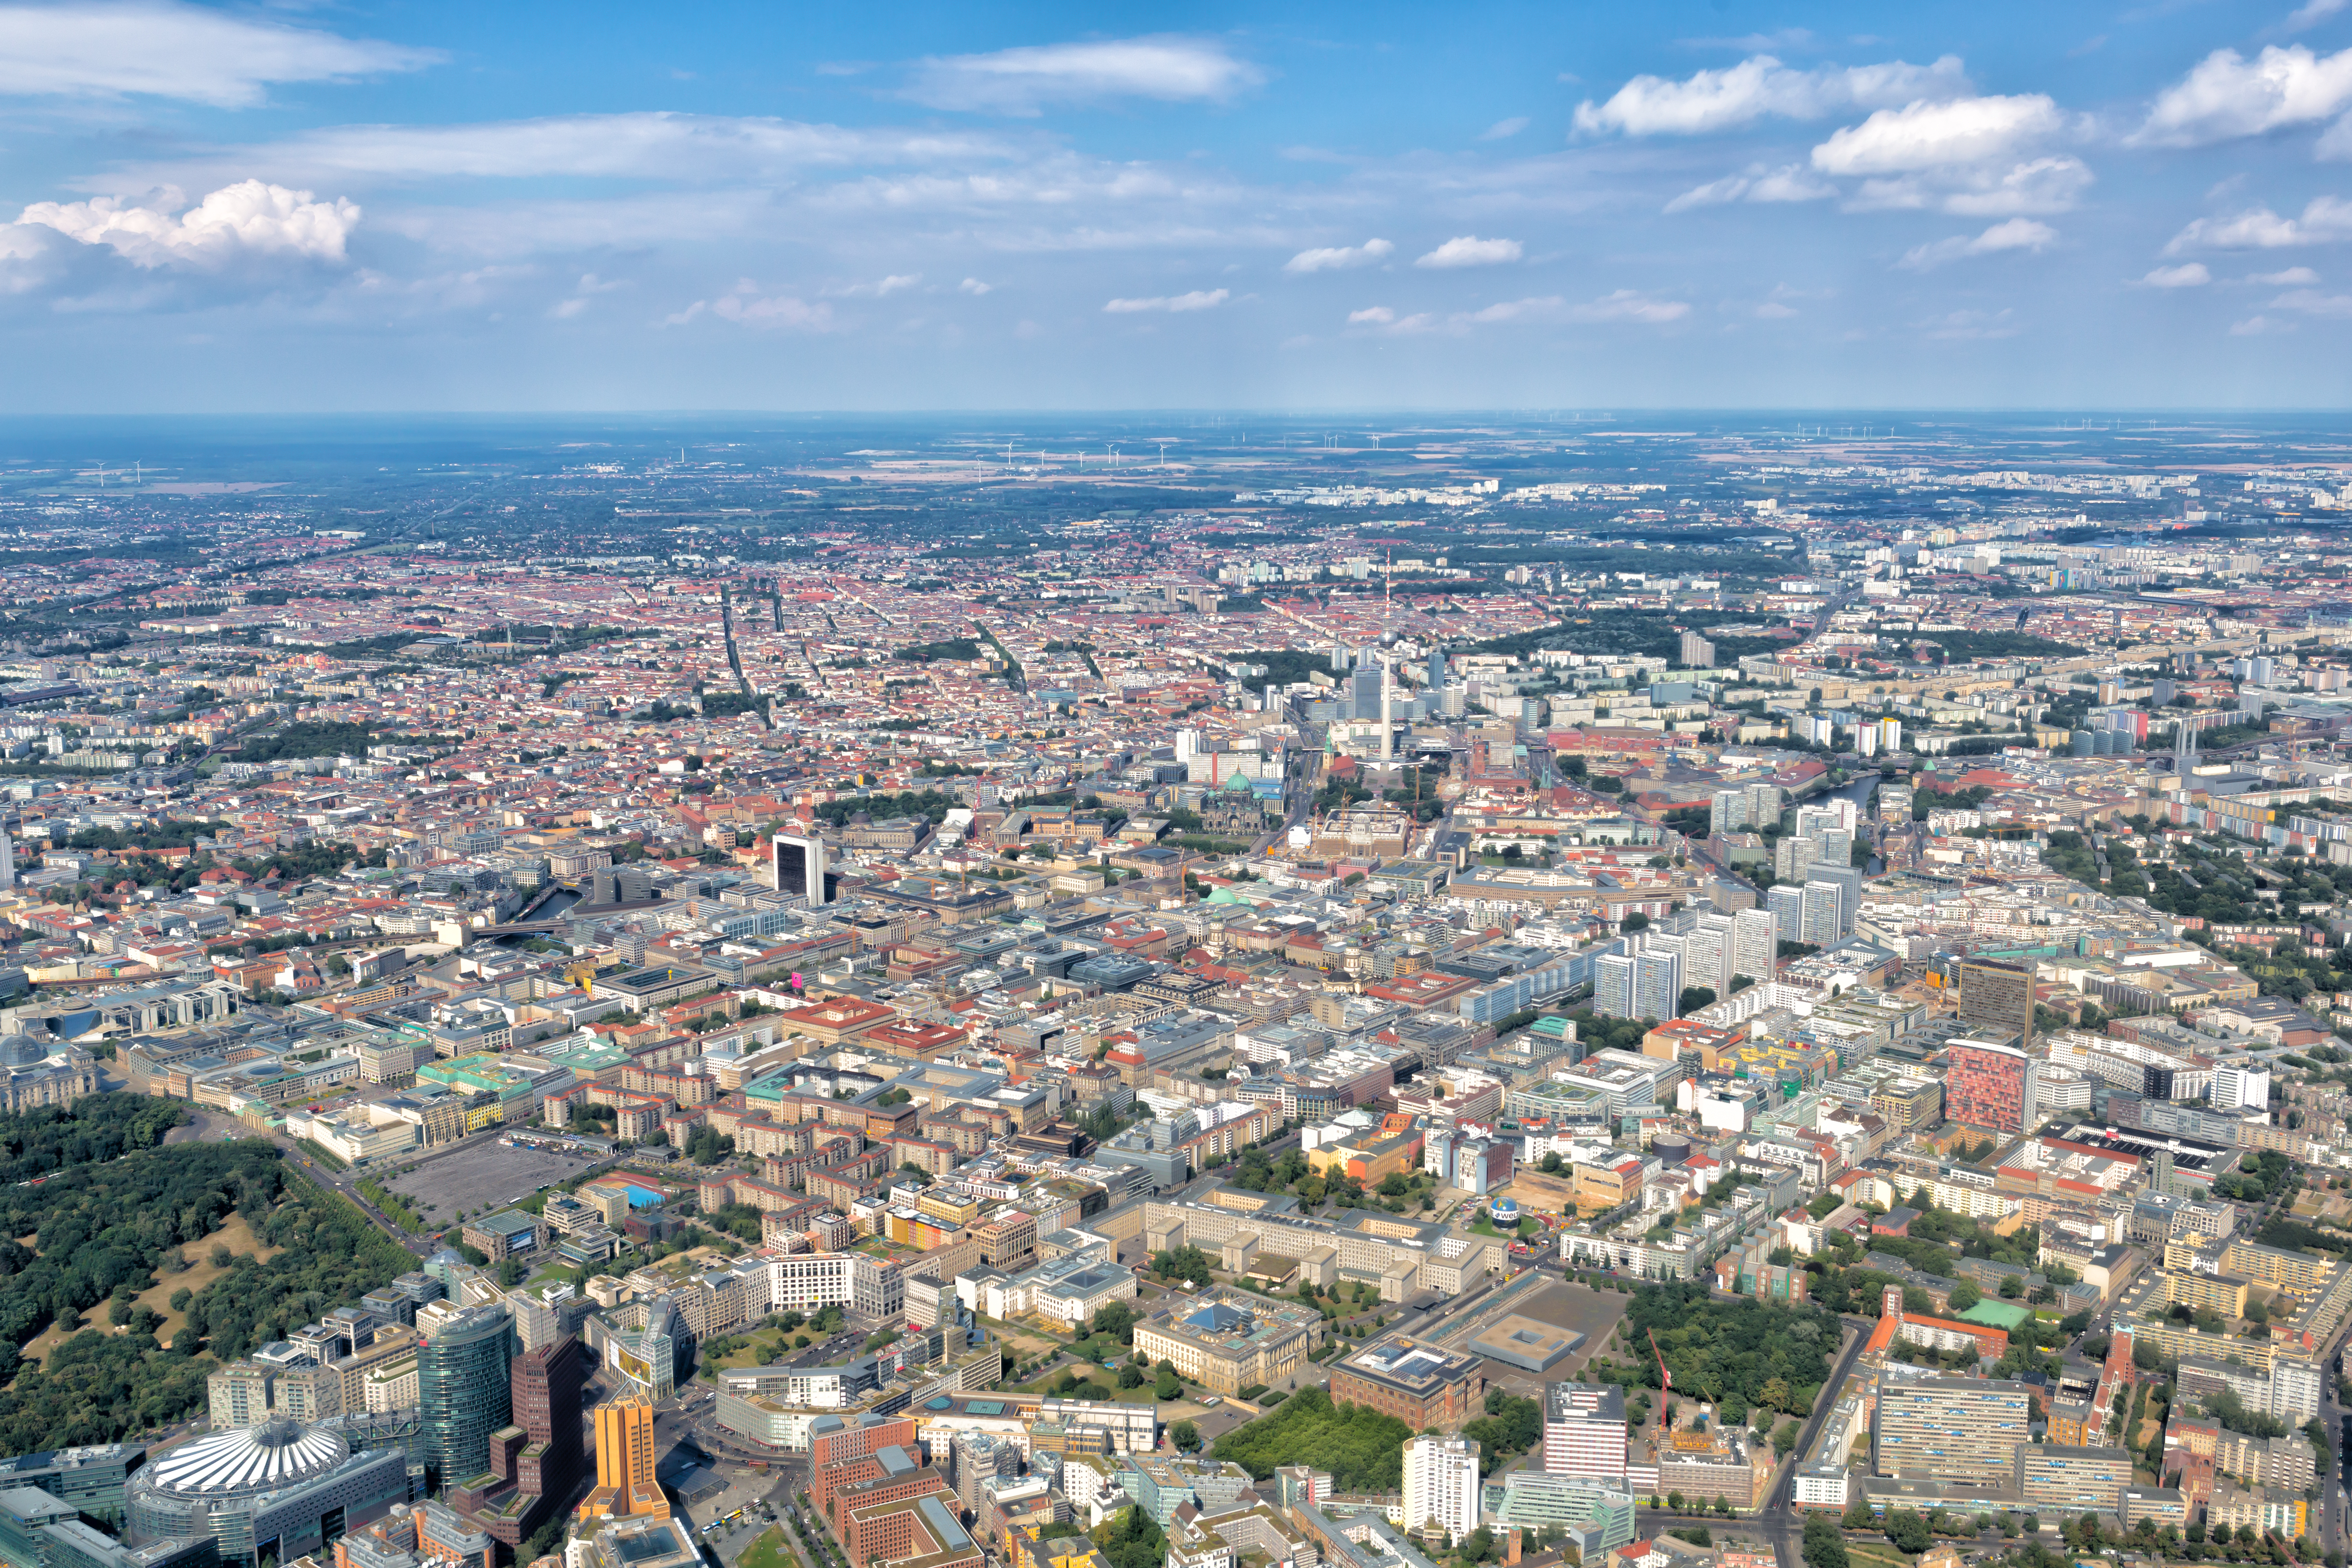 File:Berlin - Aerial view - 2016.jpg - Wikimedia Commons